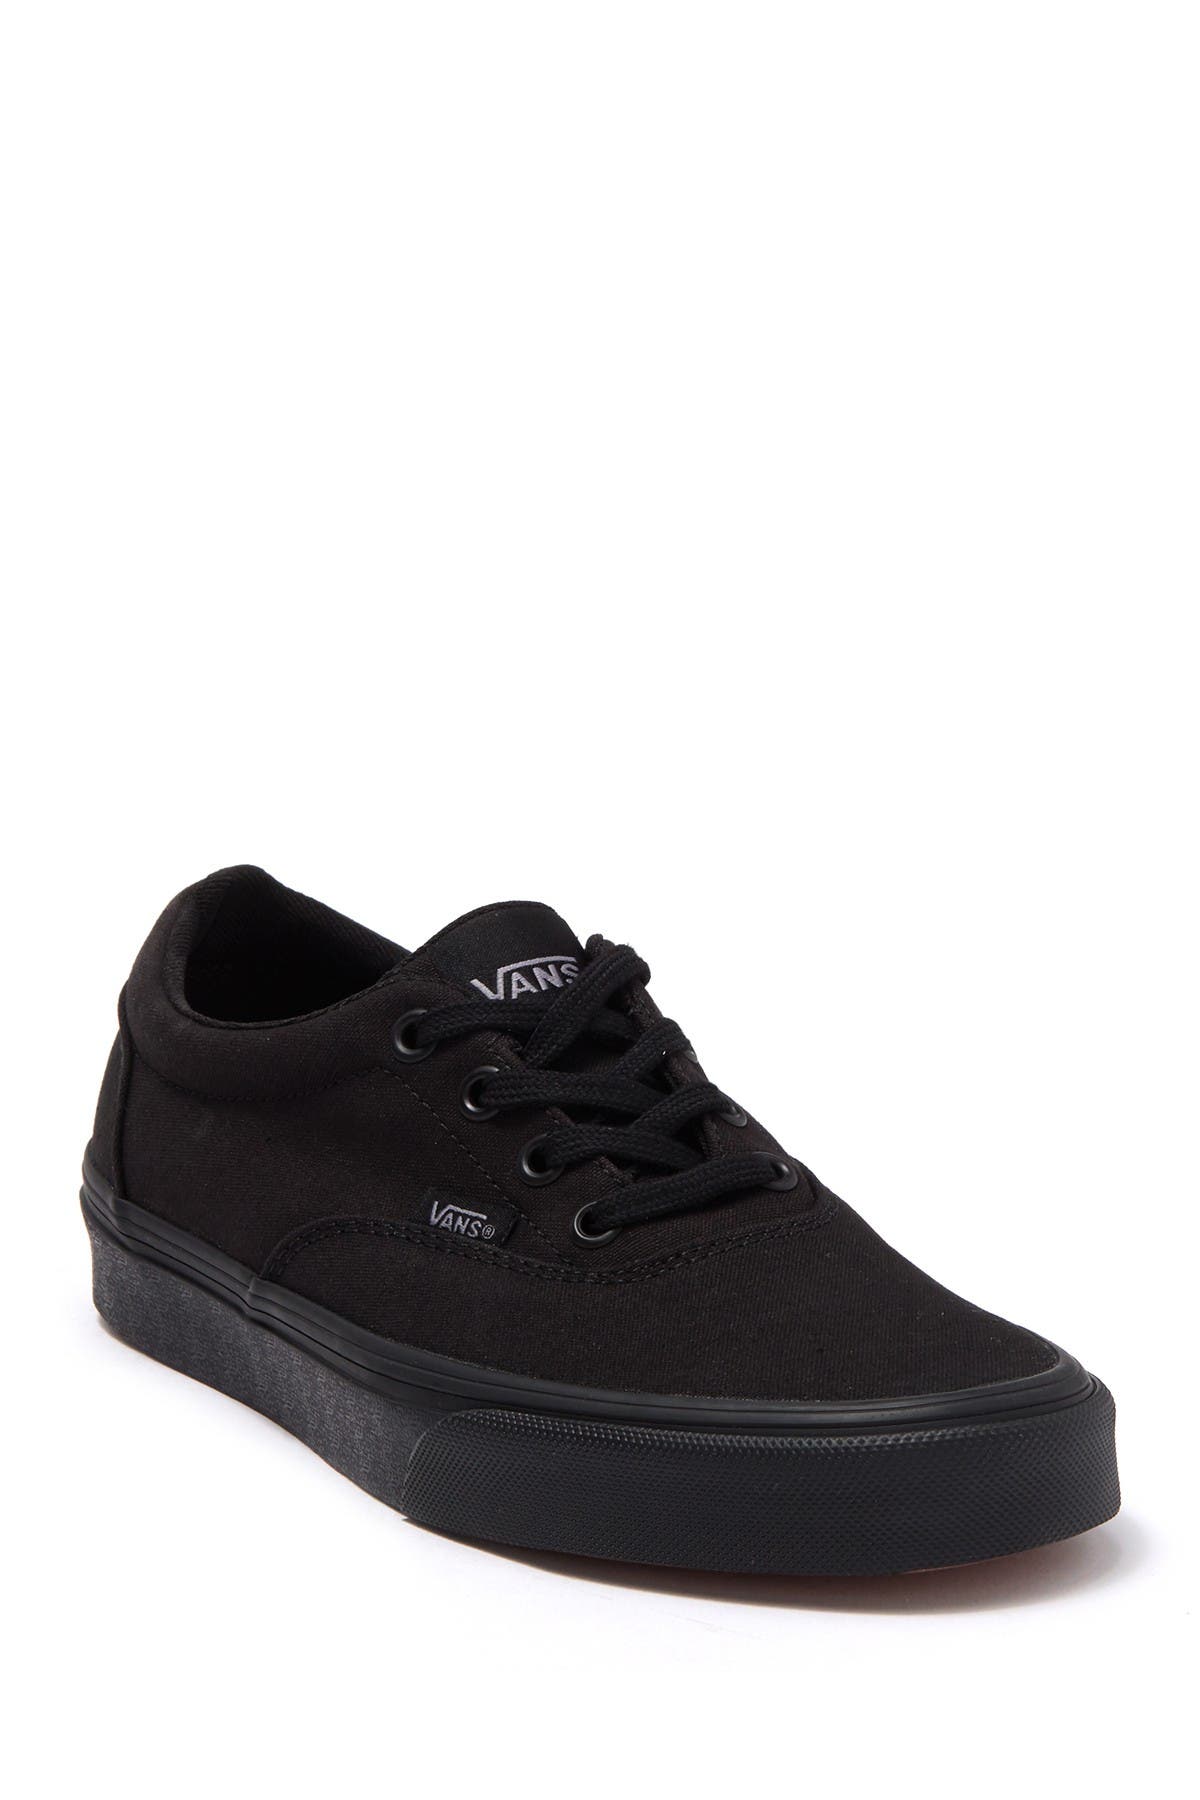 Vans Doheny Sneaker In Black